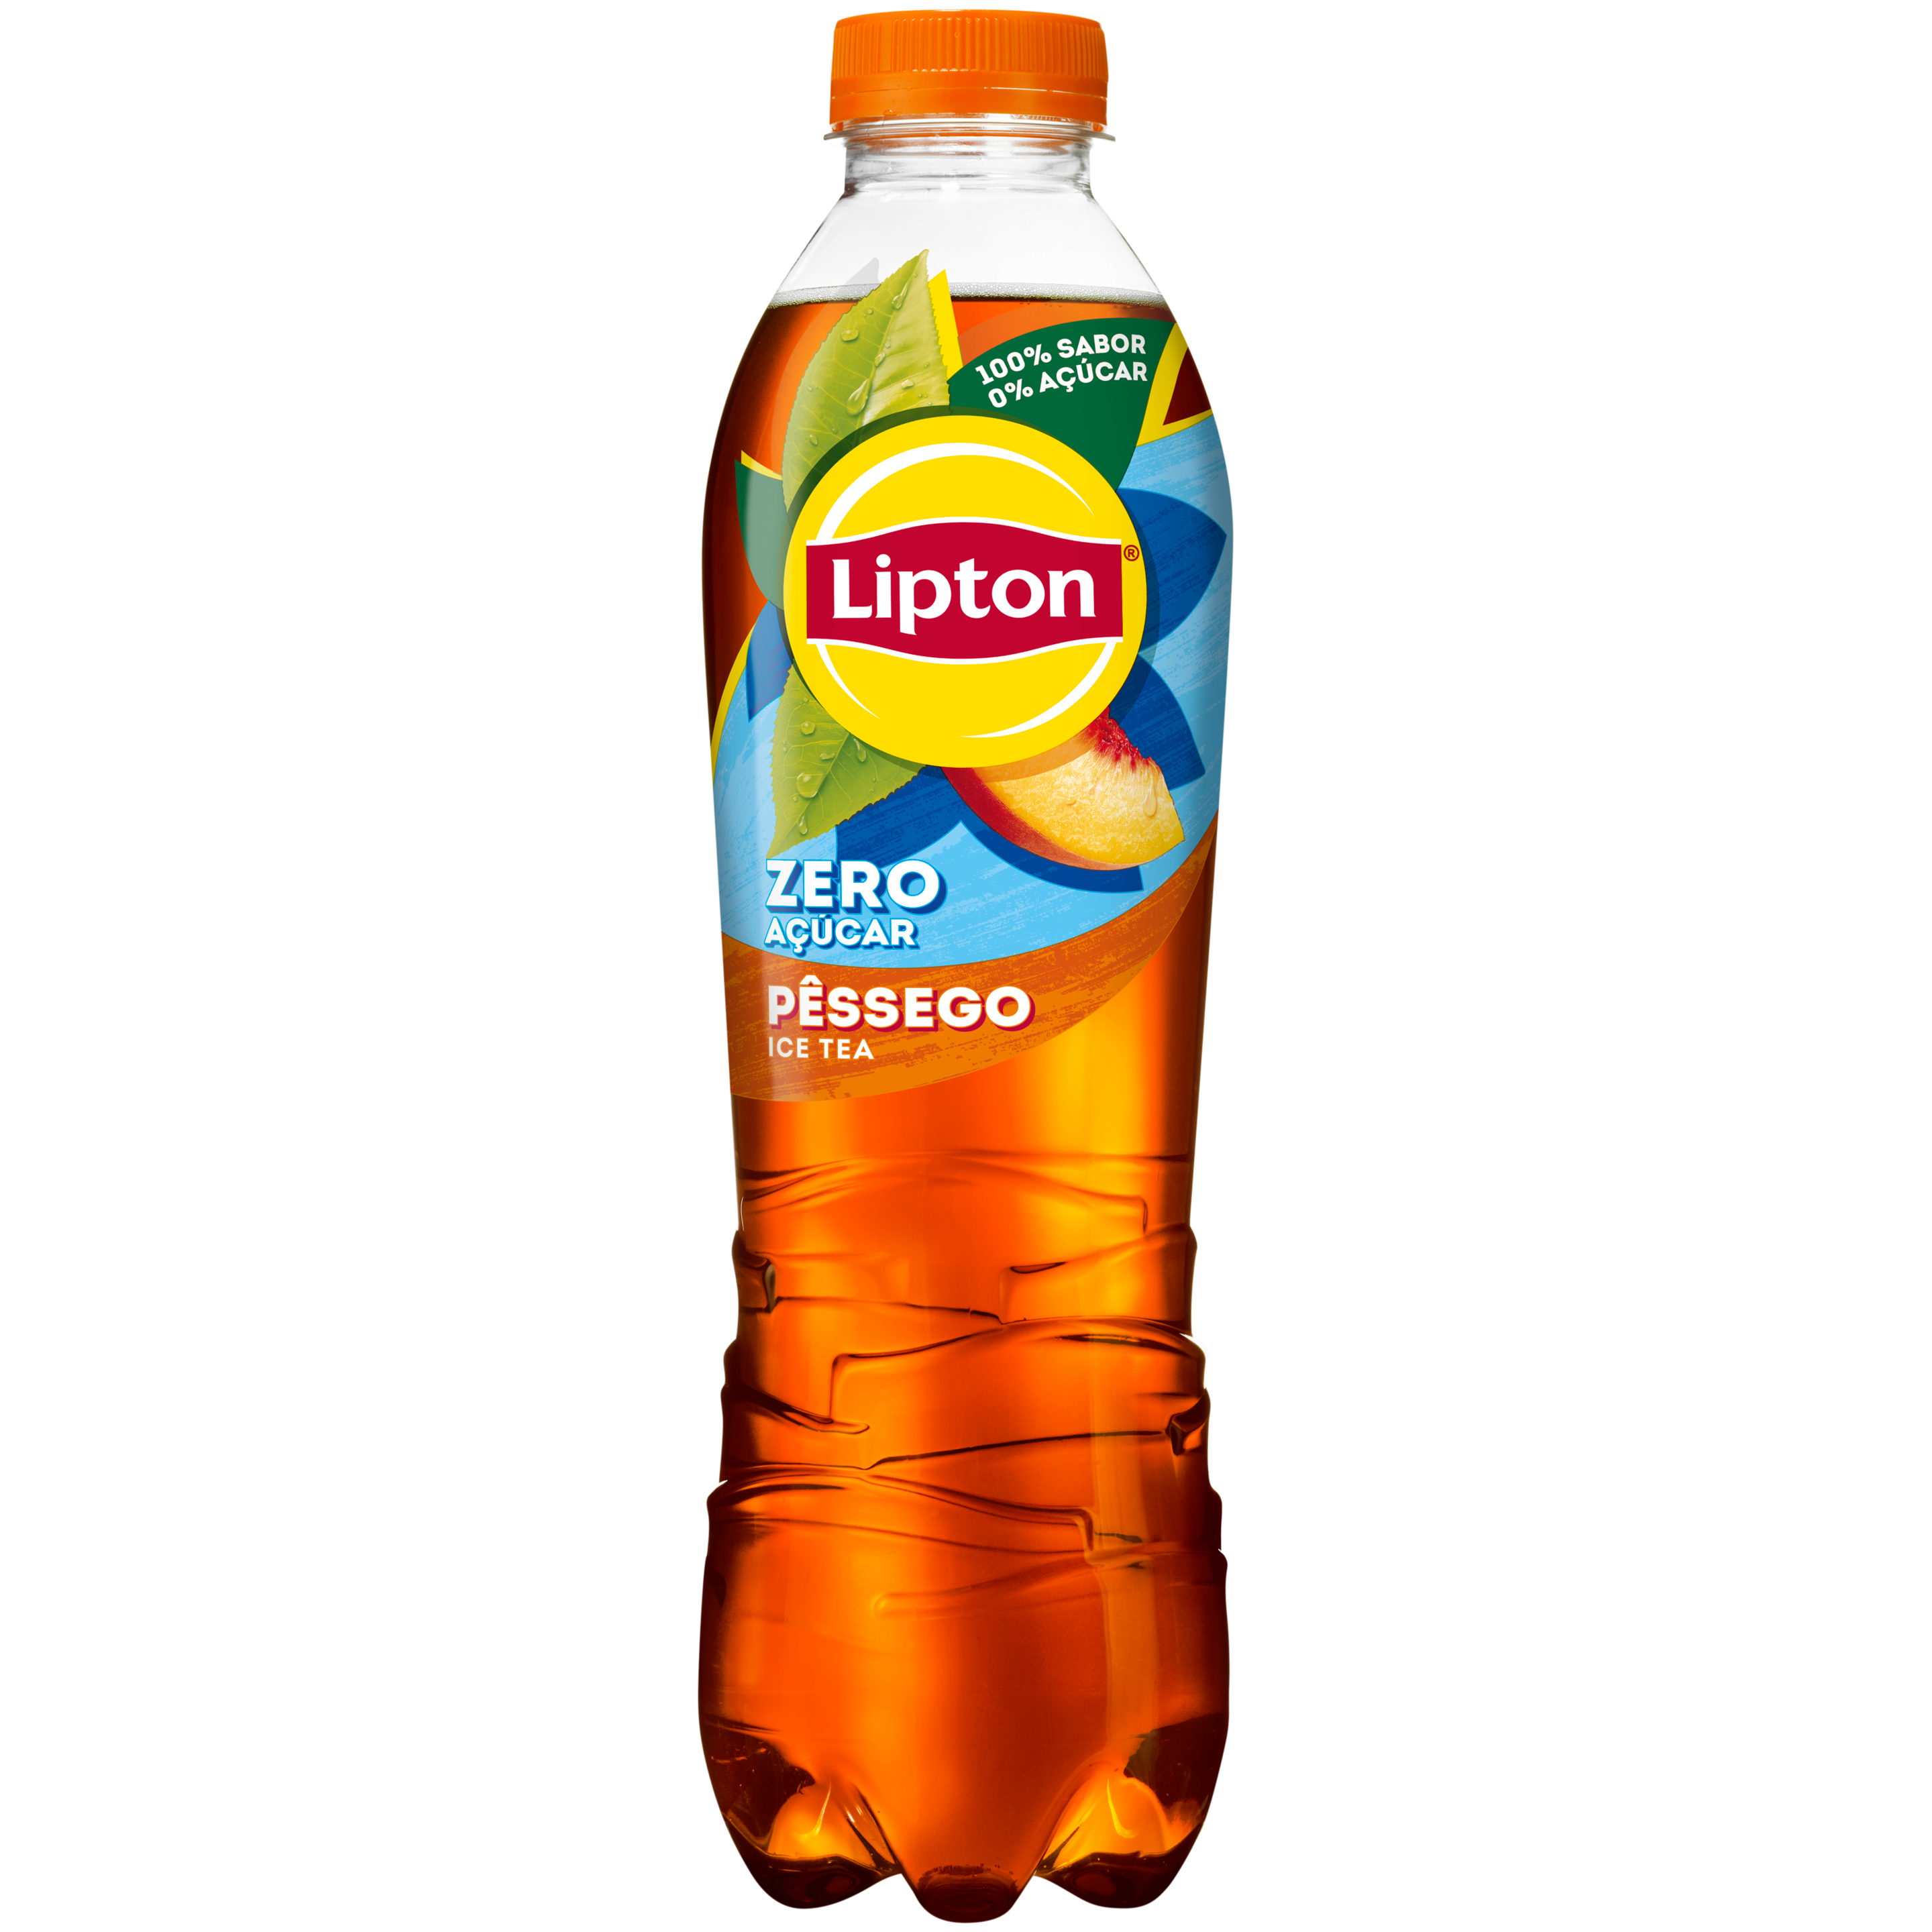 Lipton Ie Tea Pêssego Zero Açúcar 1L